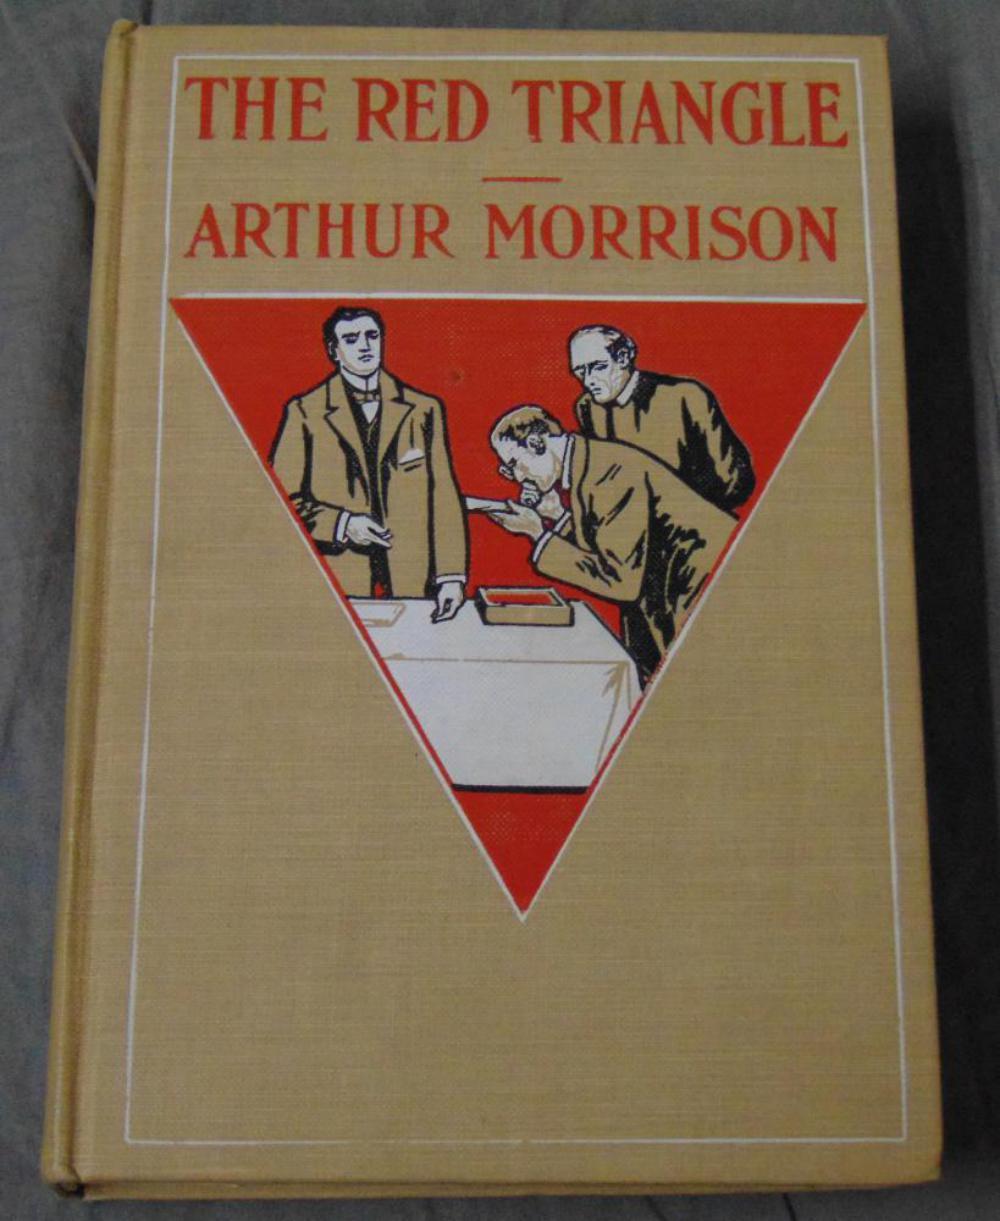 Arthur Morrison. Lot of Three 1st Editions.